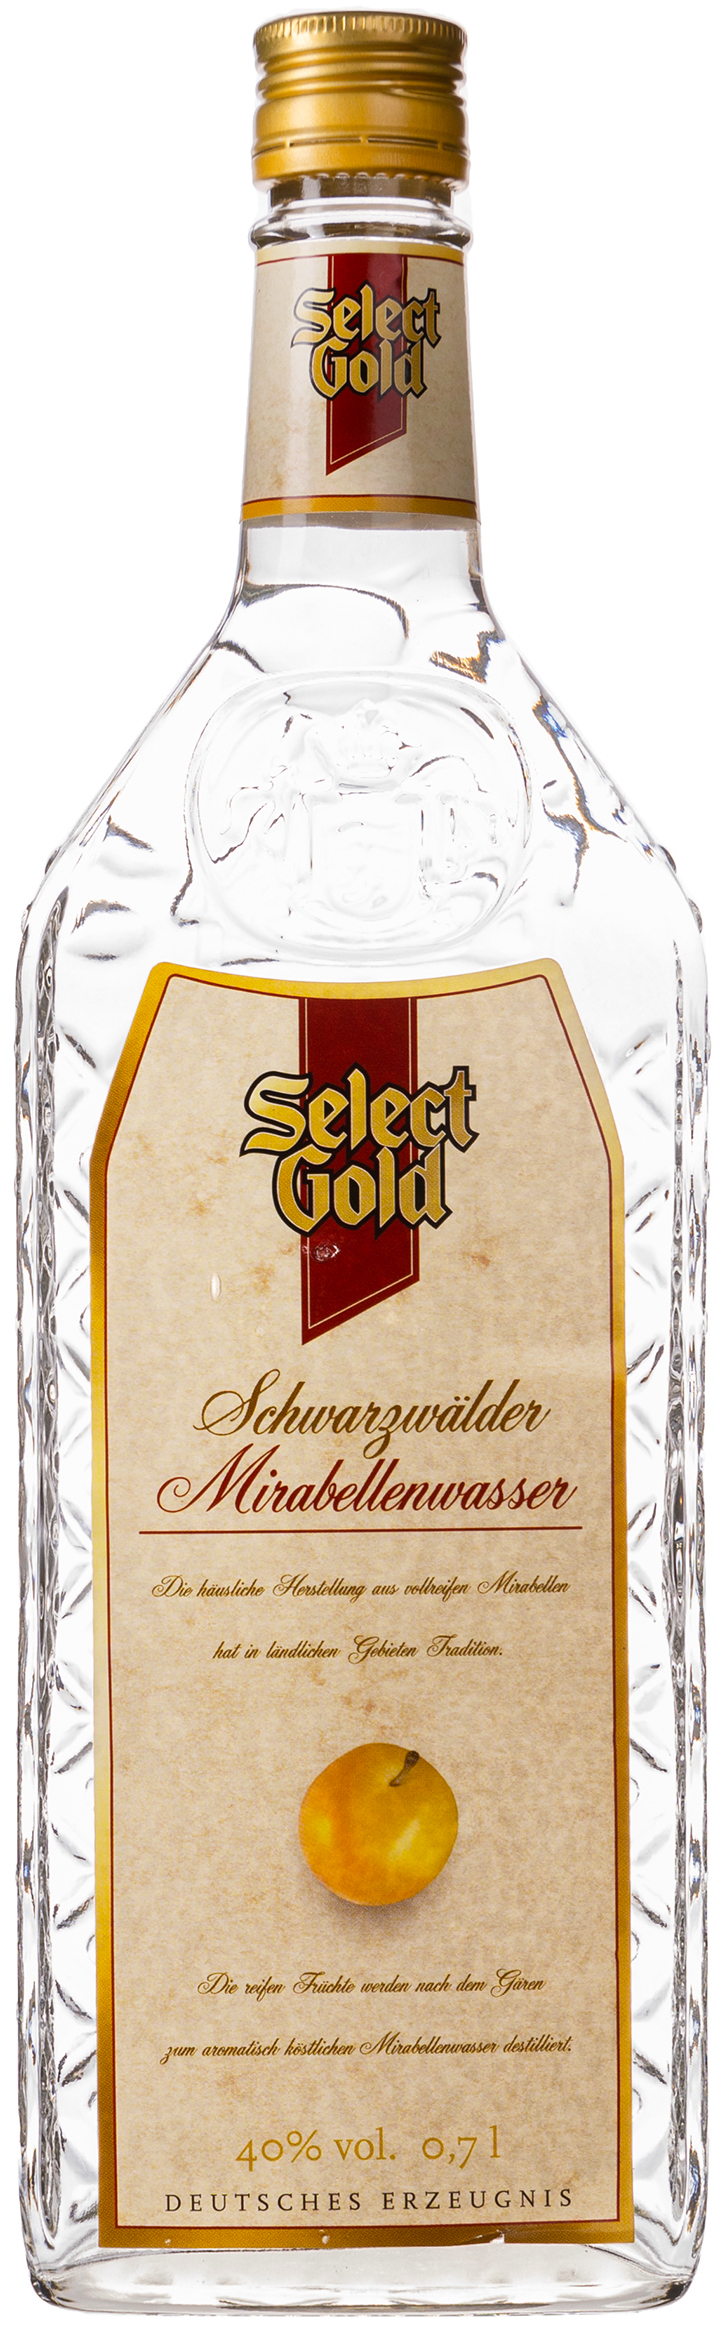 Select Gold Schwarzwälder Mirabellenwasser 40% vol. 0,7L